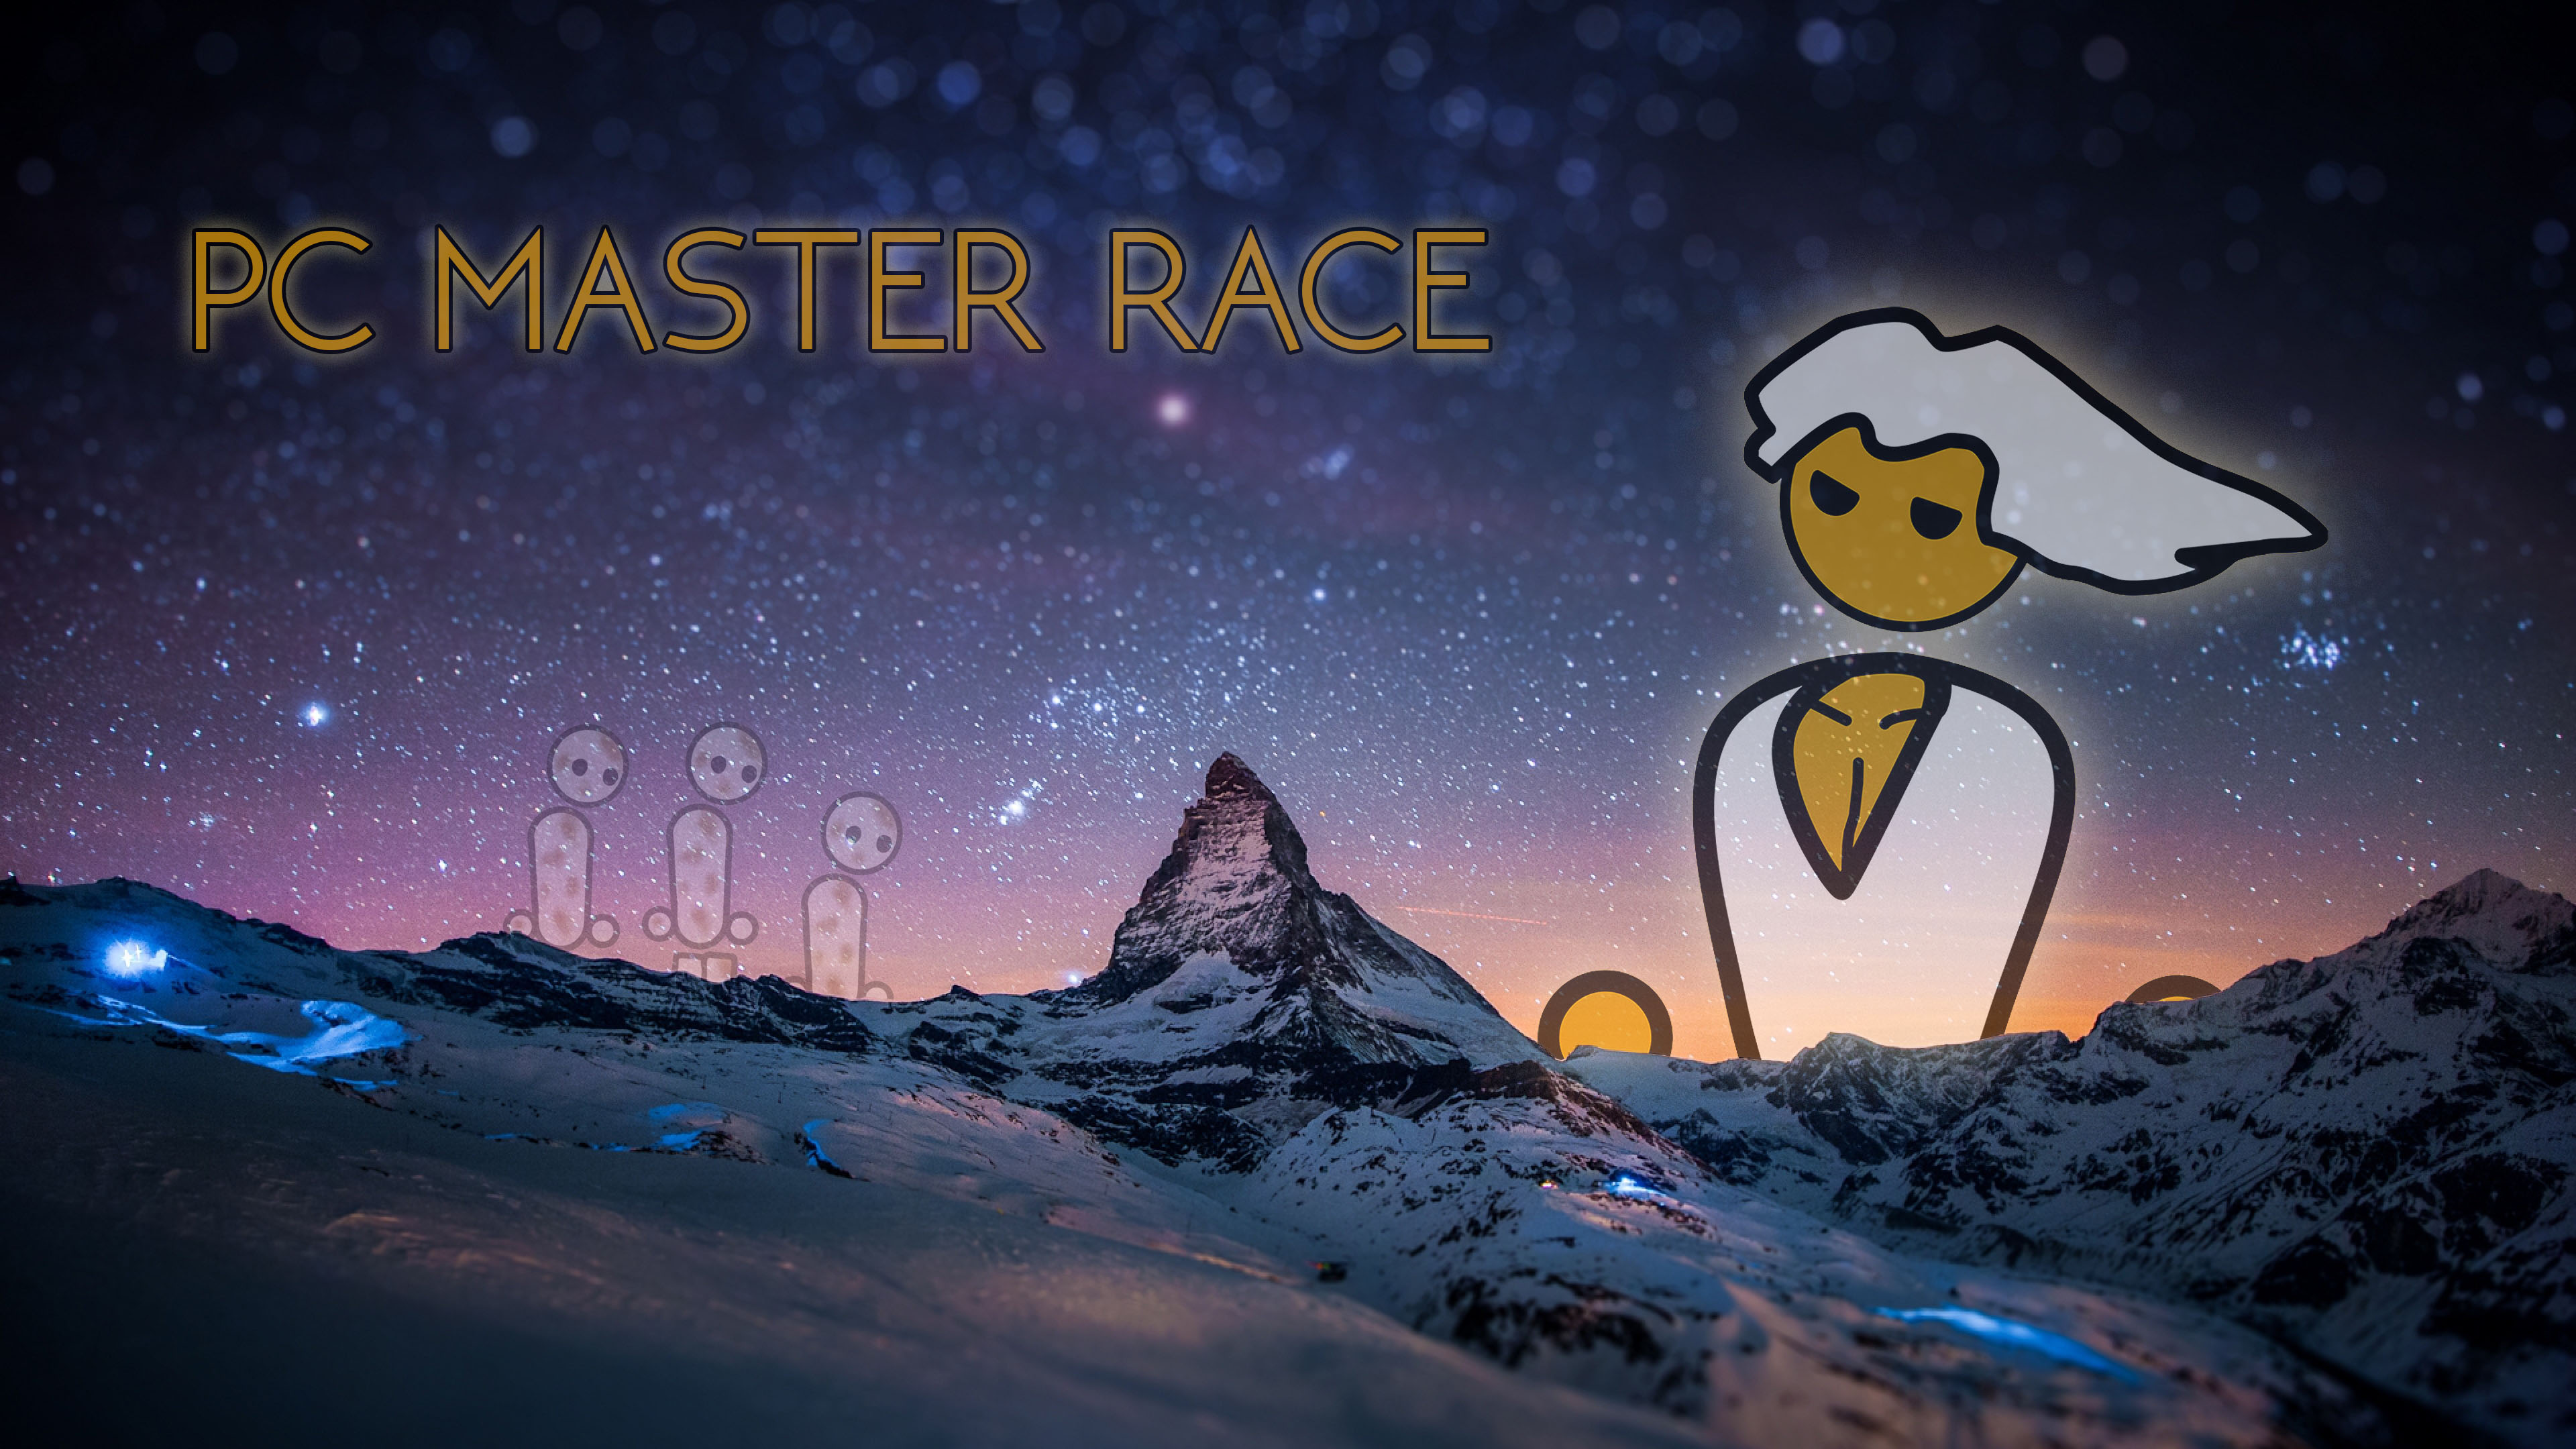 Pc Master Race 4k Ultra Hd Wallpaper Background Image